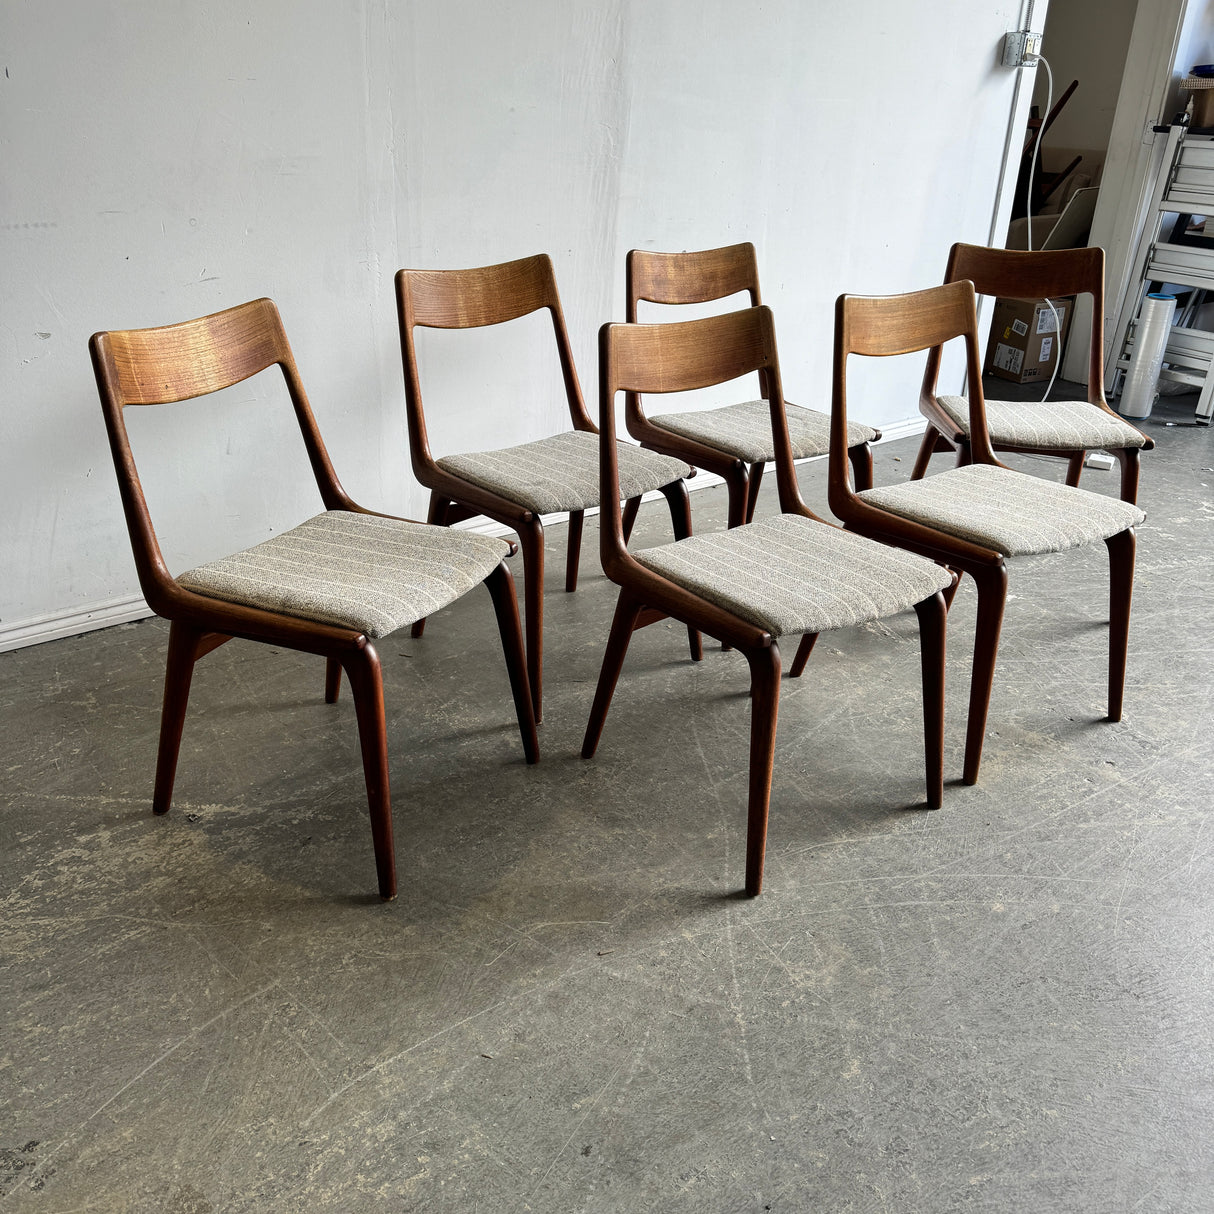 Danish Modern set of 6 "Boomerang" chairs by Alfred Christensen for Slagelse